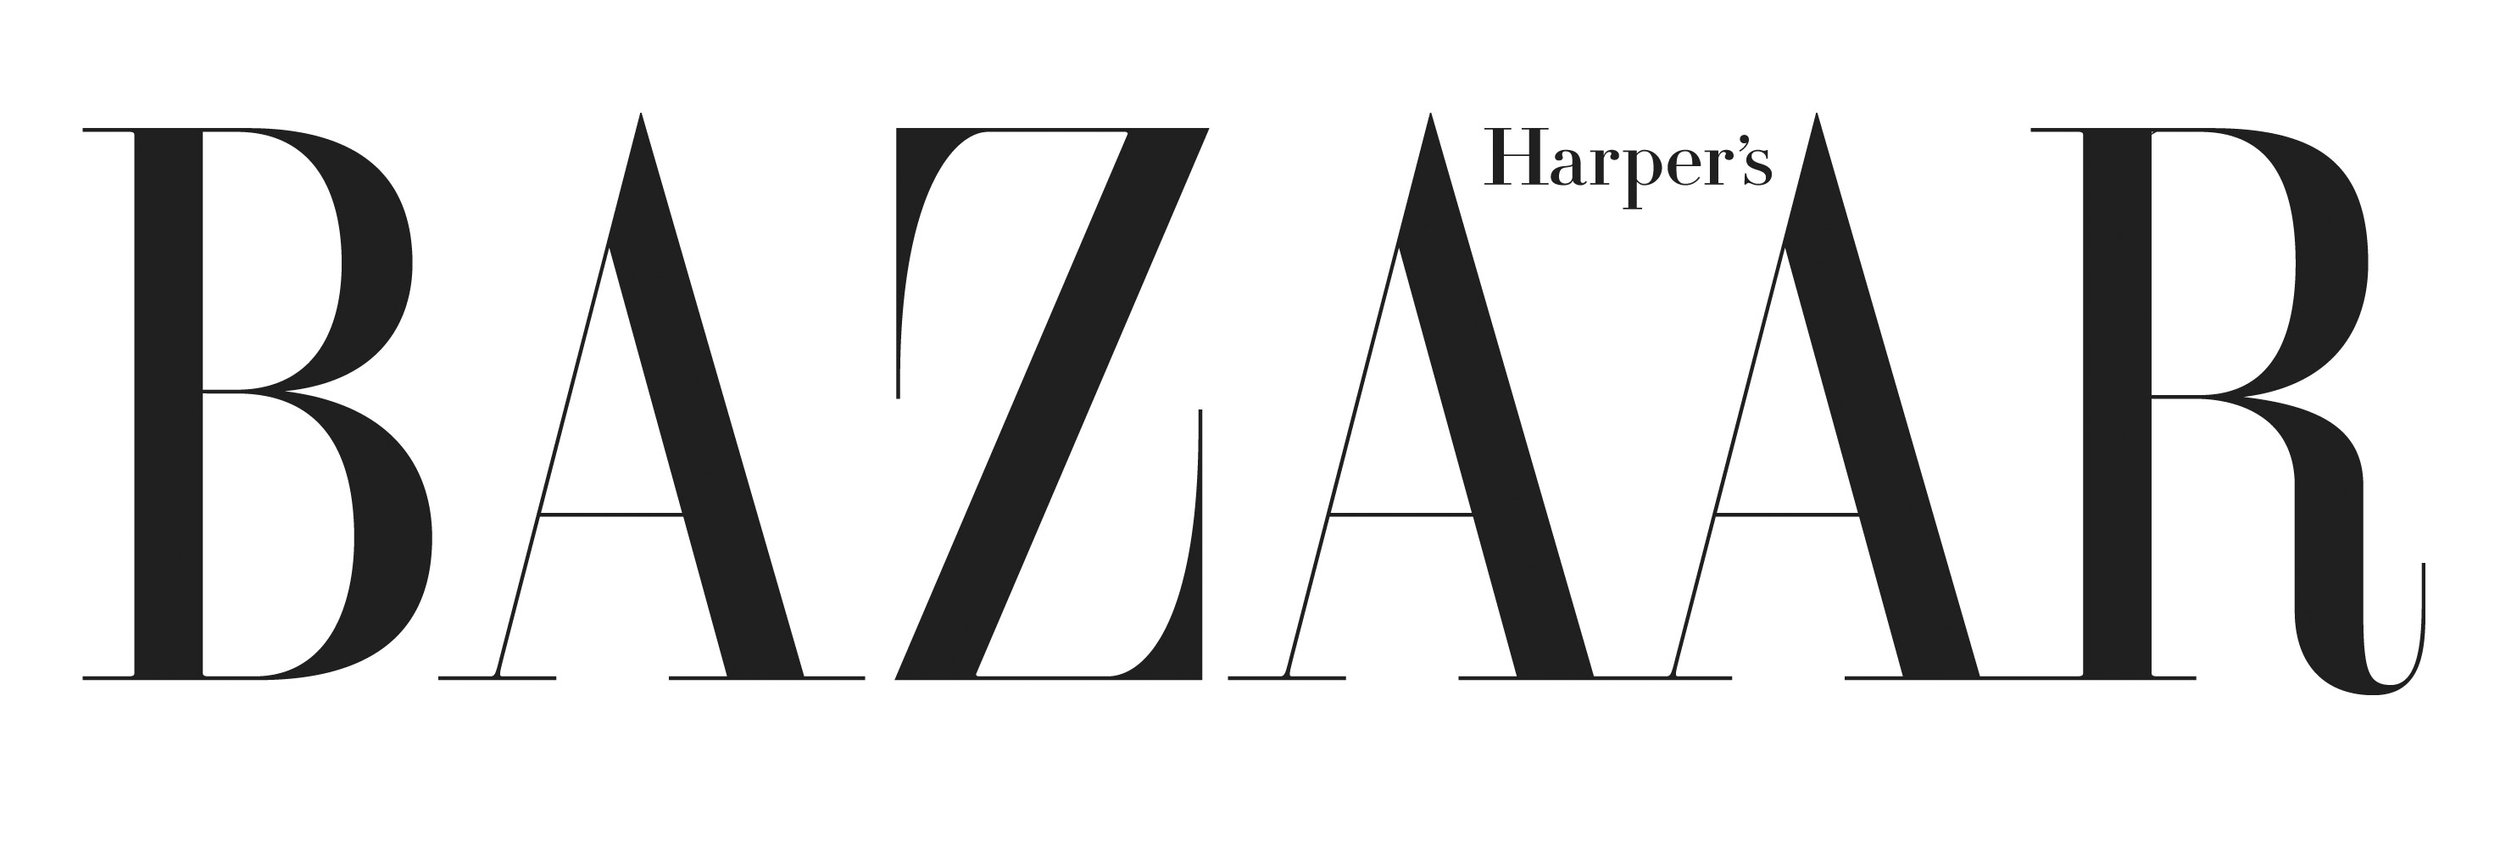 Harper's_Bazaar_Logo.jpeg